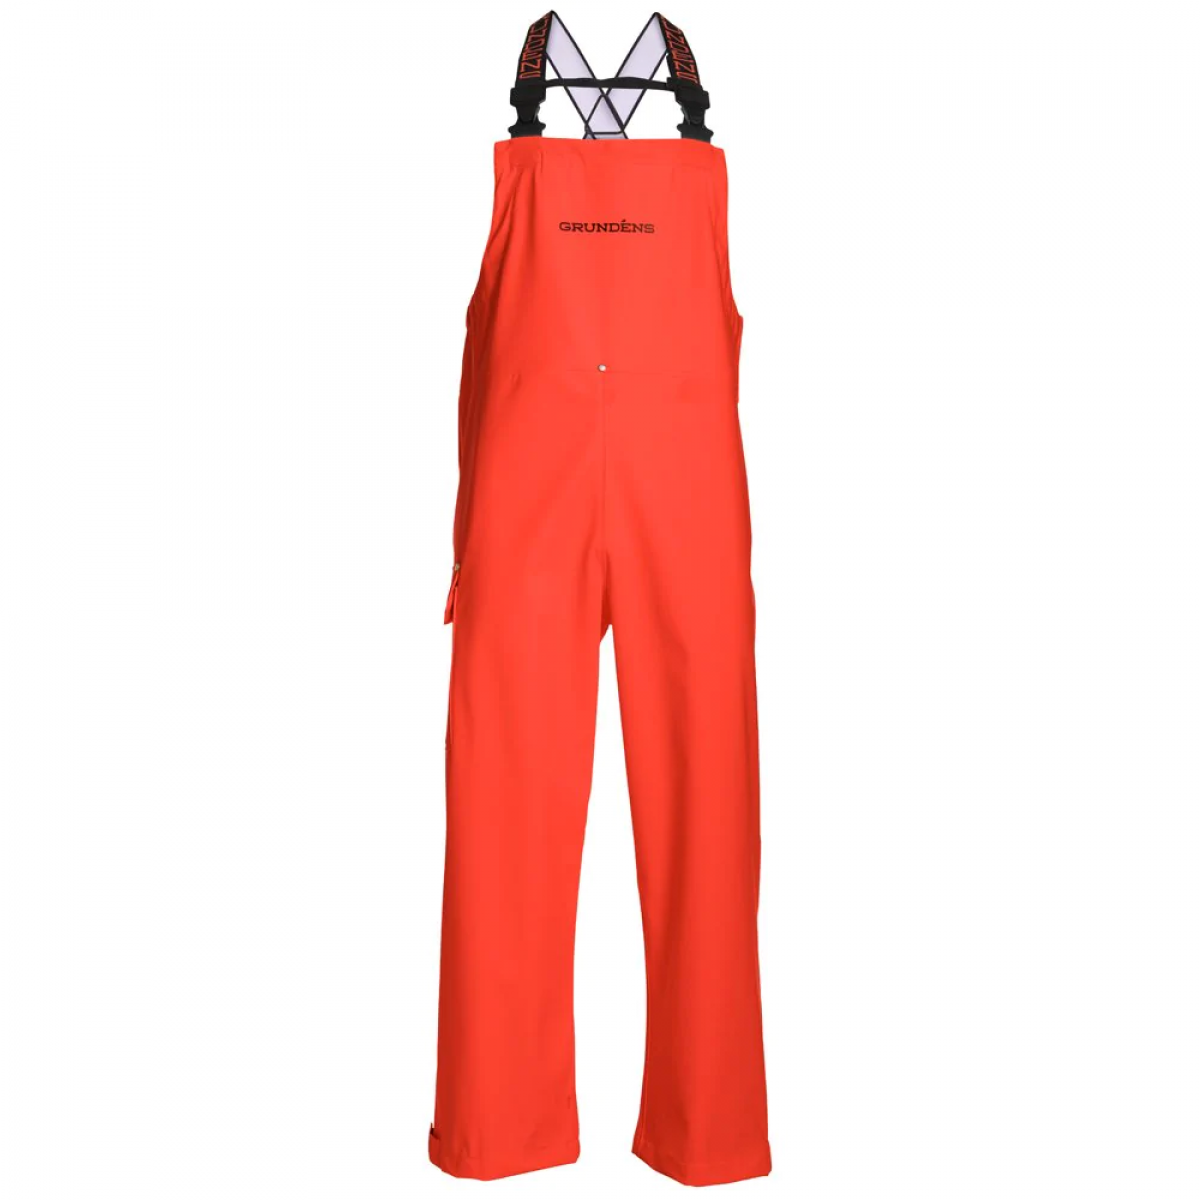 Grundens Neptune 509 Commercial Fishing Bib Pants Orange Size XL - 10075